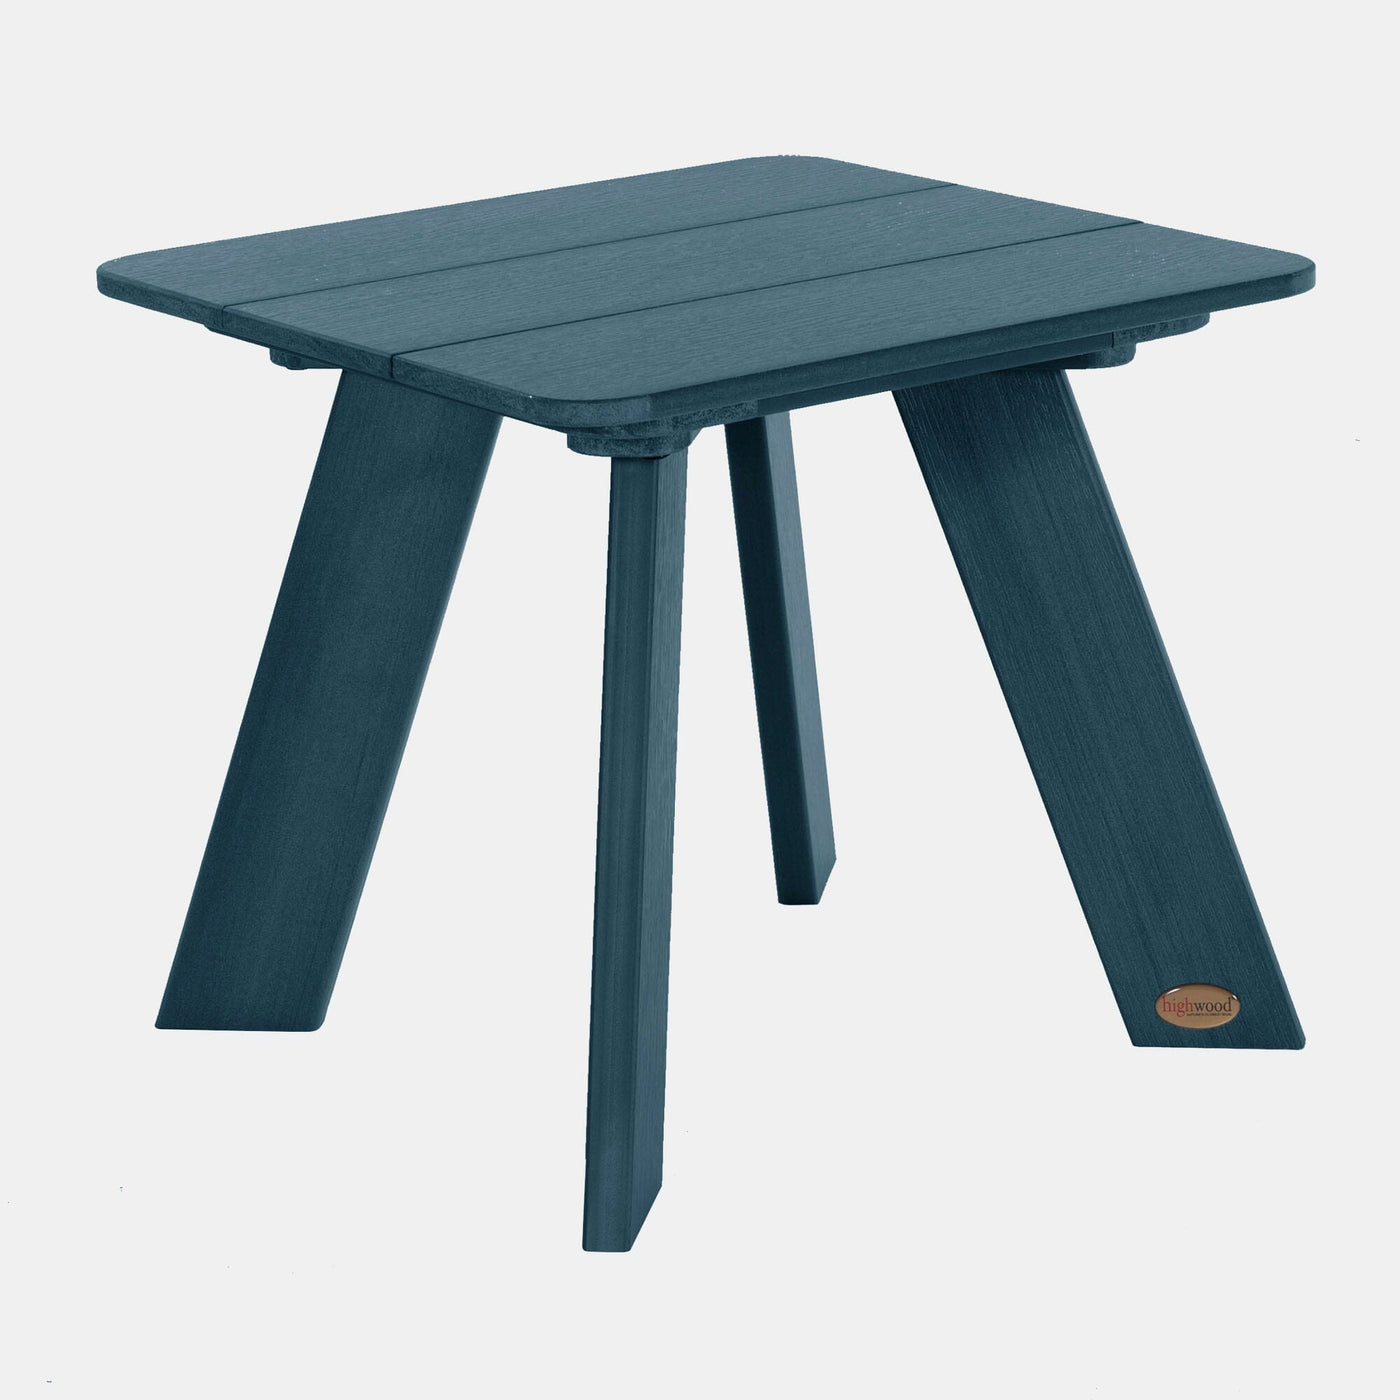 Italica Modern Side table in Nantucket Blue